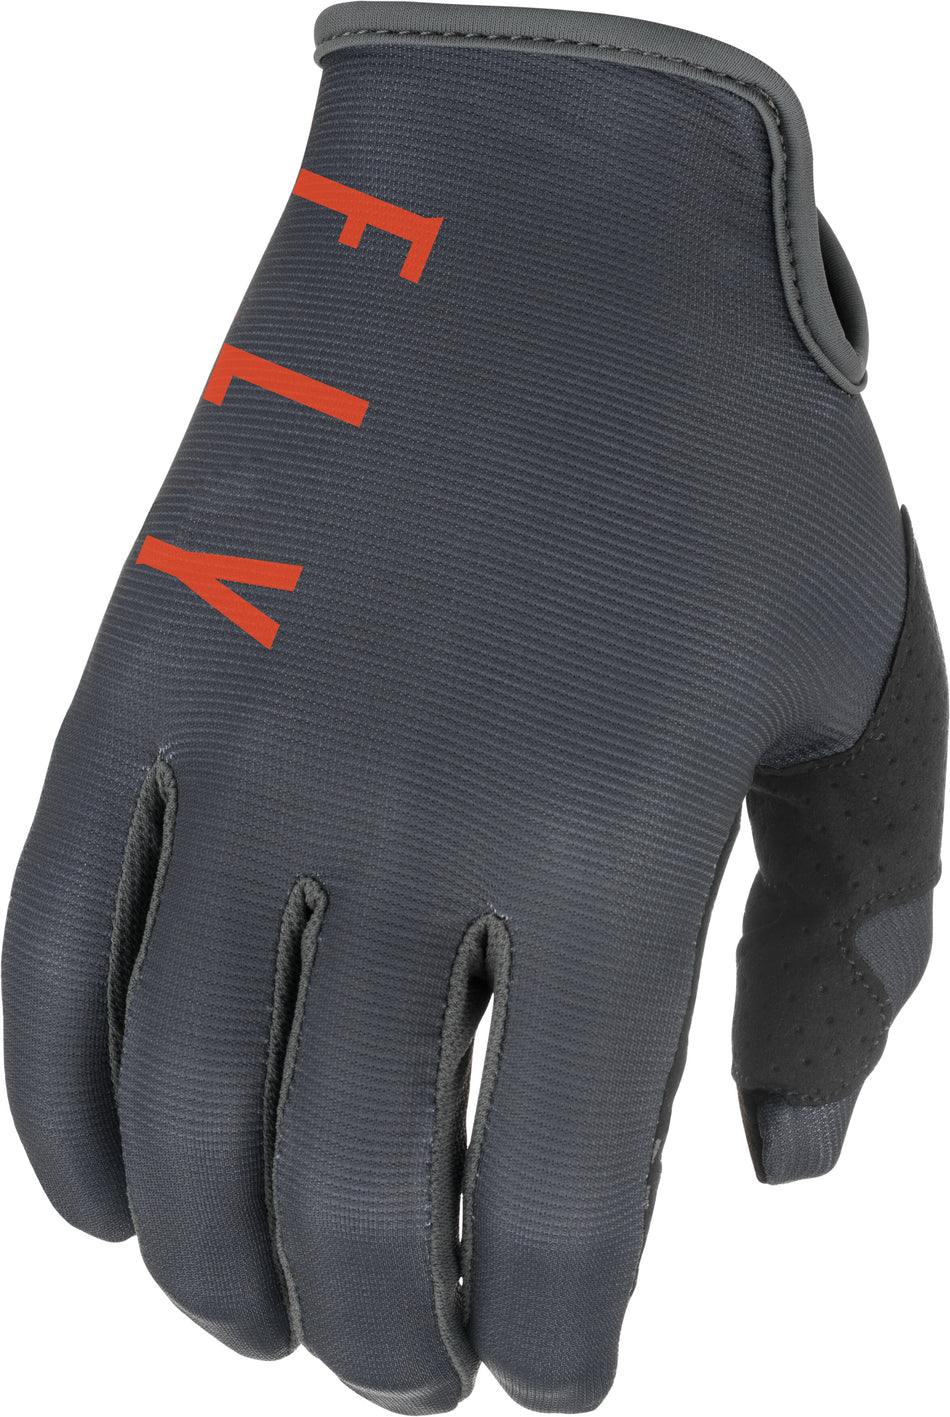 FLY RACING Lite Gloves Grey/Orange/Black Sz 10 374-71610